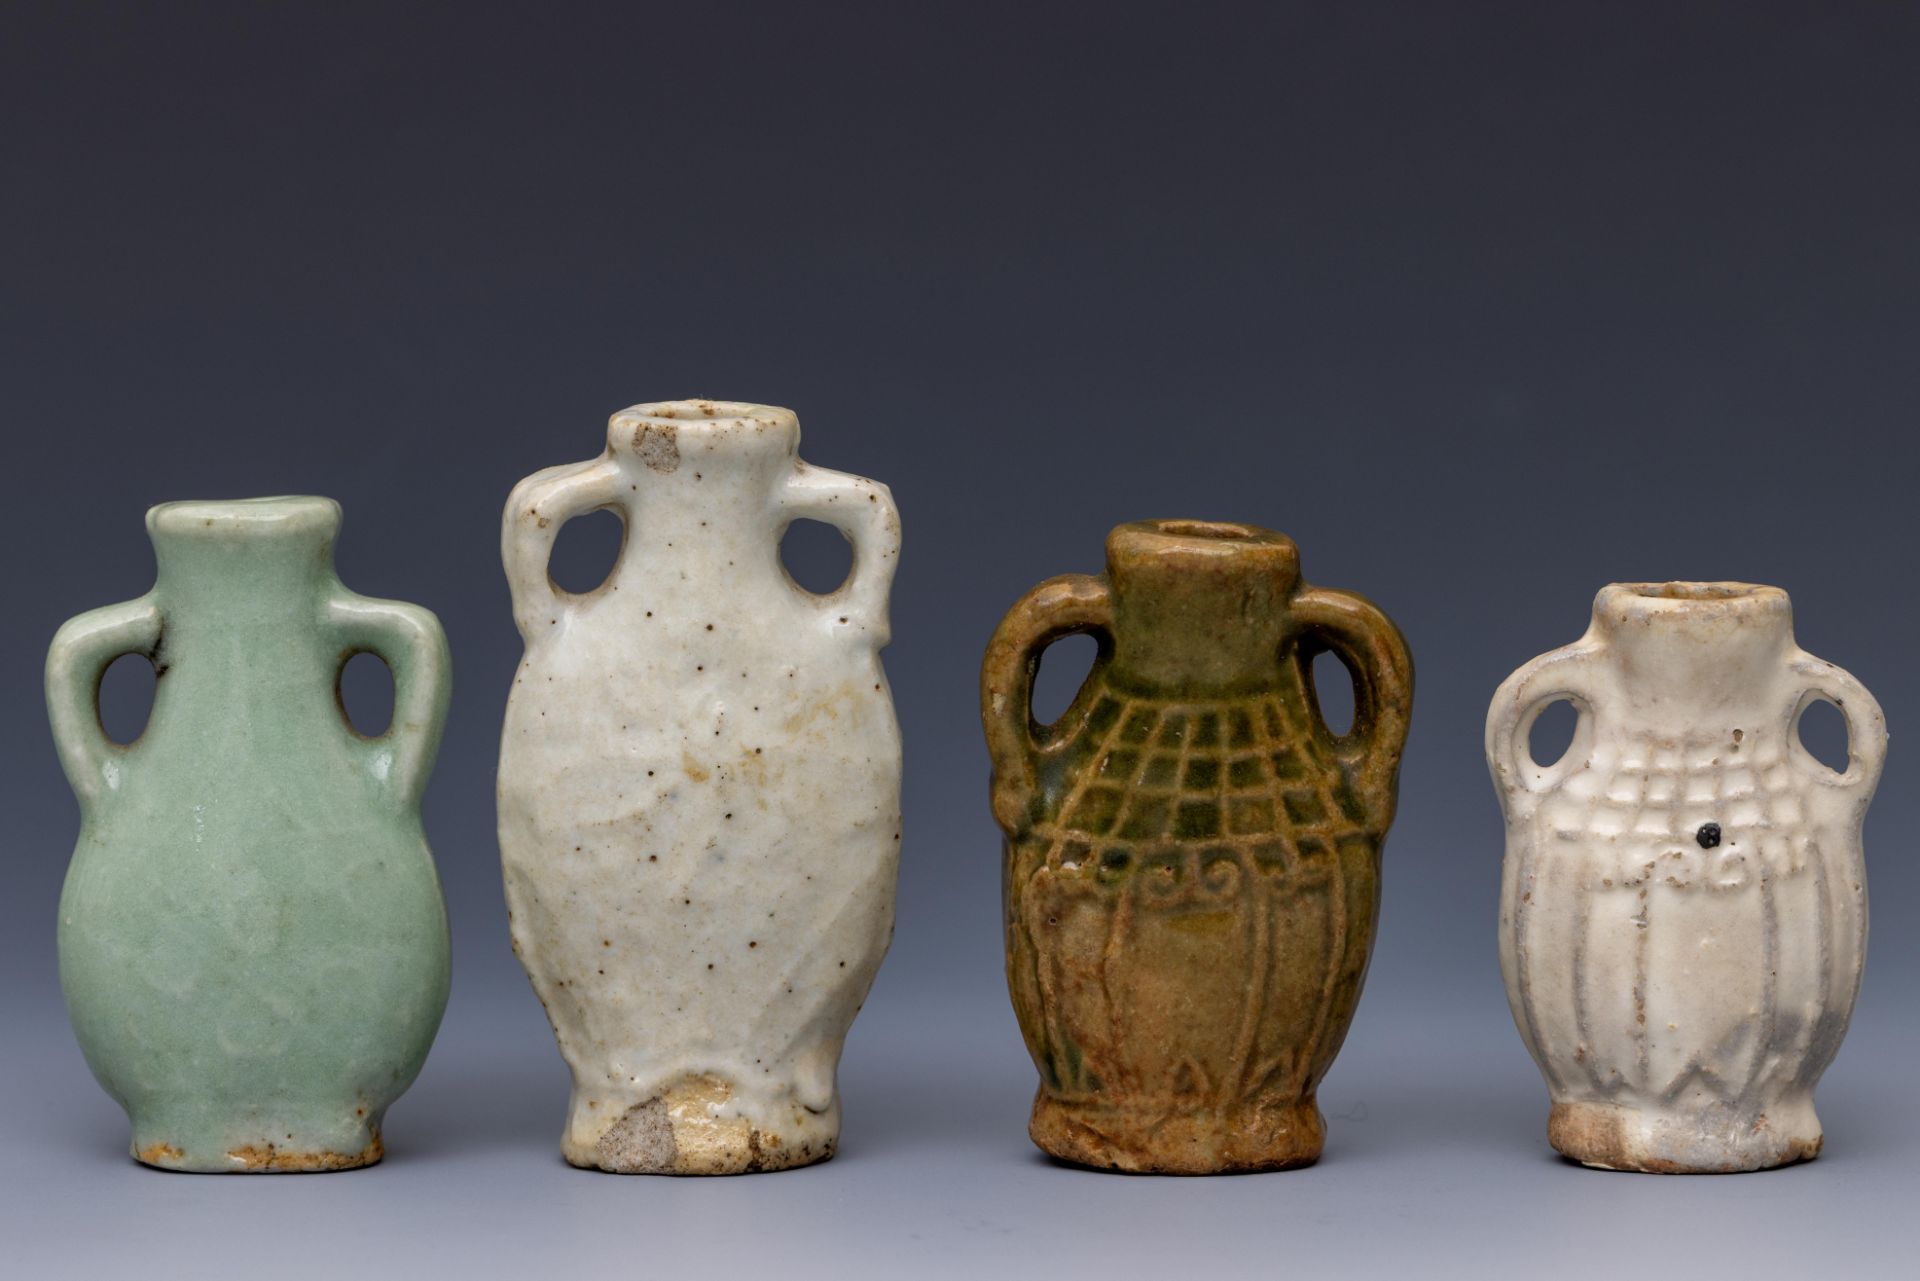 China, four ceramic miniature vases, Ming dynasty (1368-1644)